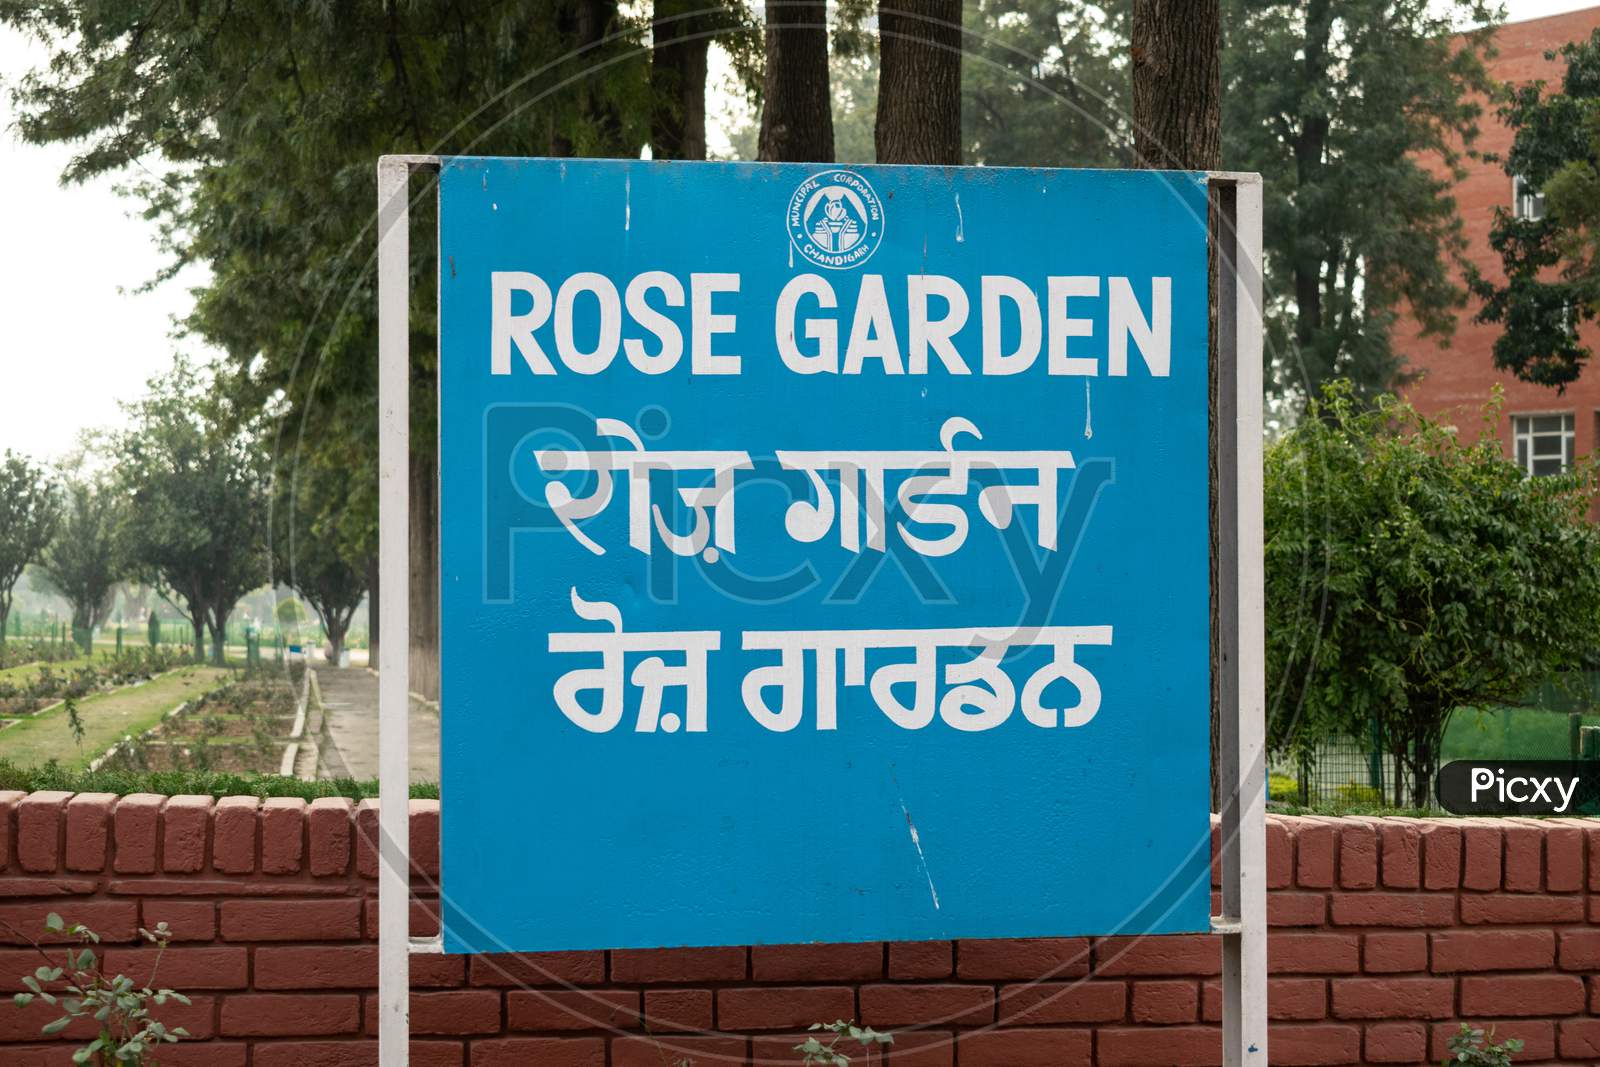 Zakir Rose Garden (Chandigarh)